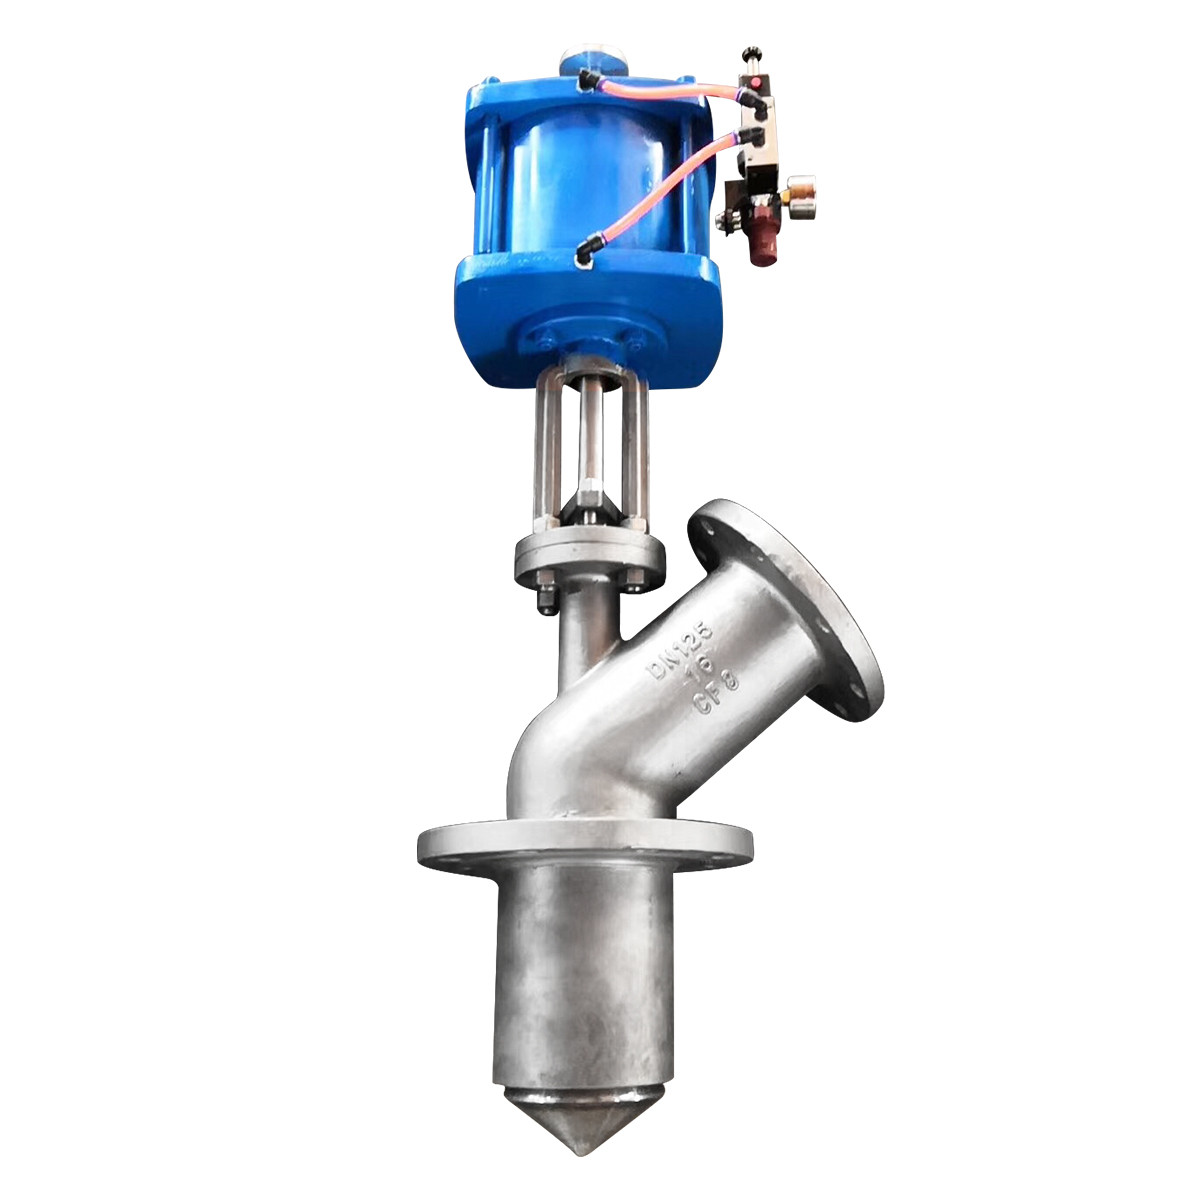 Pneumatic tank bottom valve